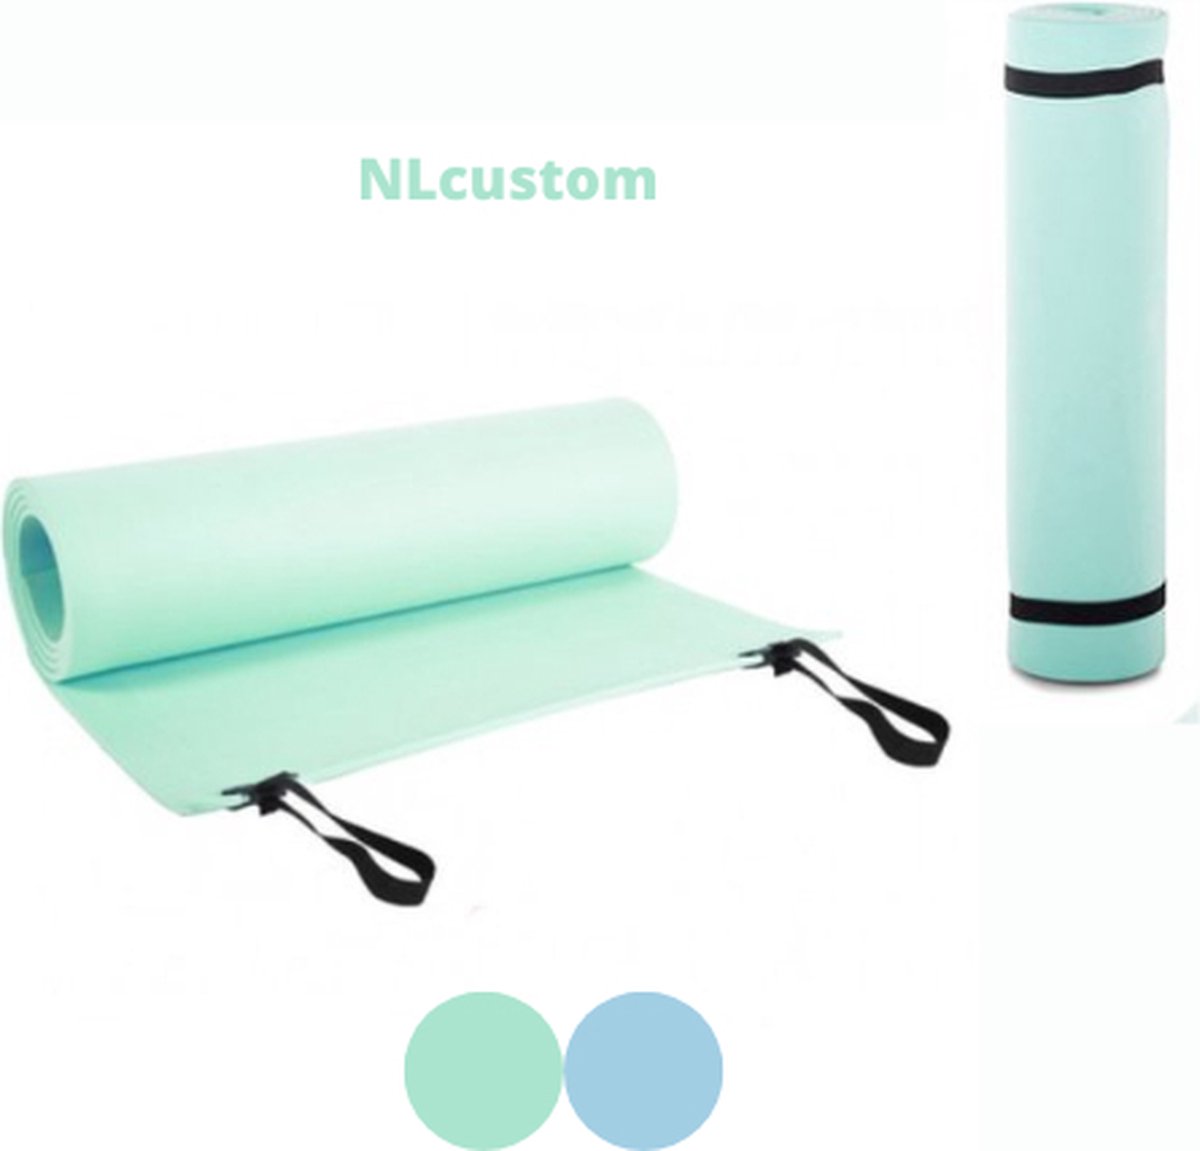 (1+1 gratis) - Yogamat 180 x 50 x 0,5 cm - Groen - Yogamat anti slip & eco - Duurzaam TPE materiaal